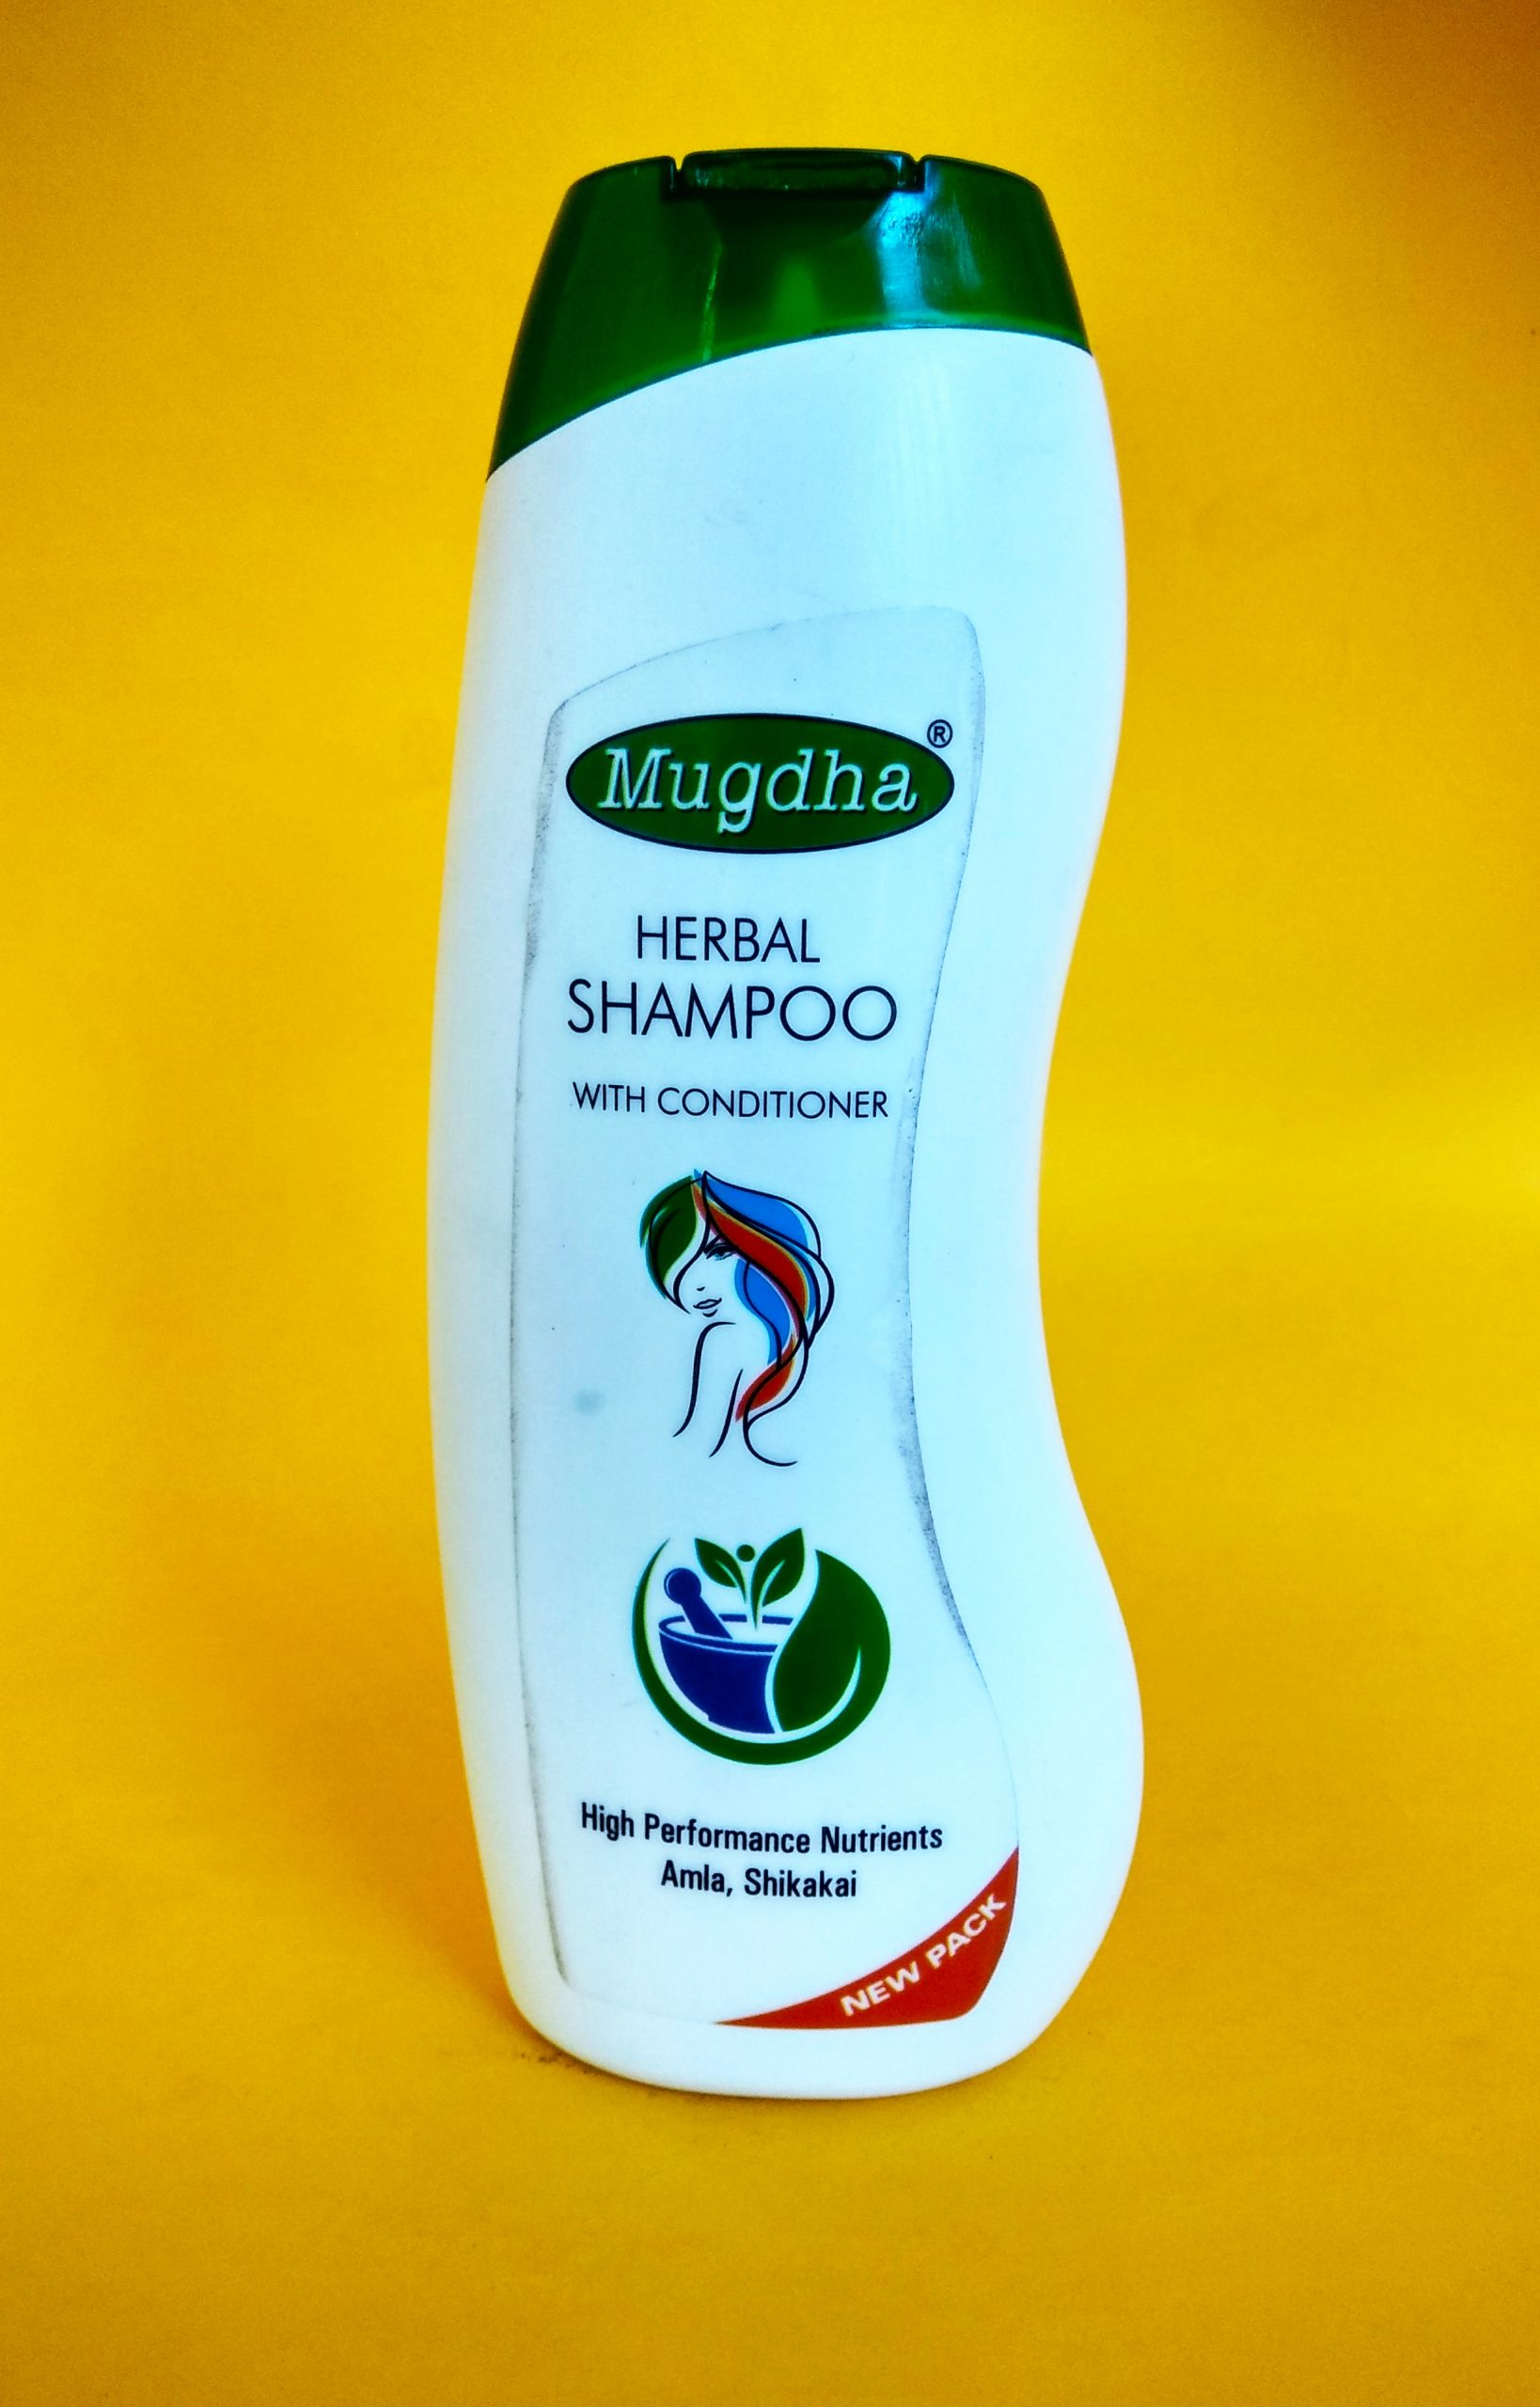 Herbal shampoo bottle